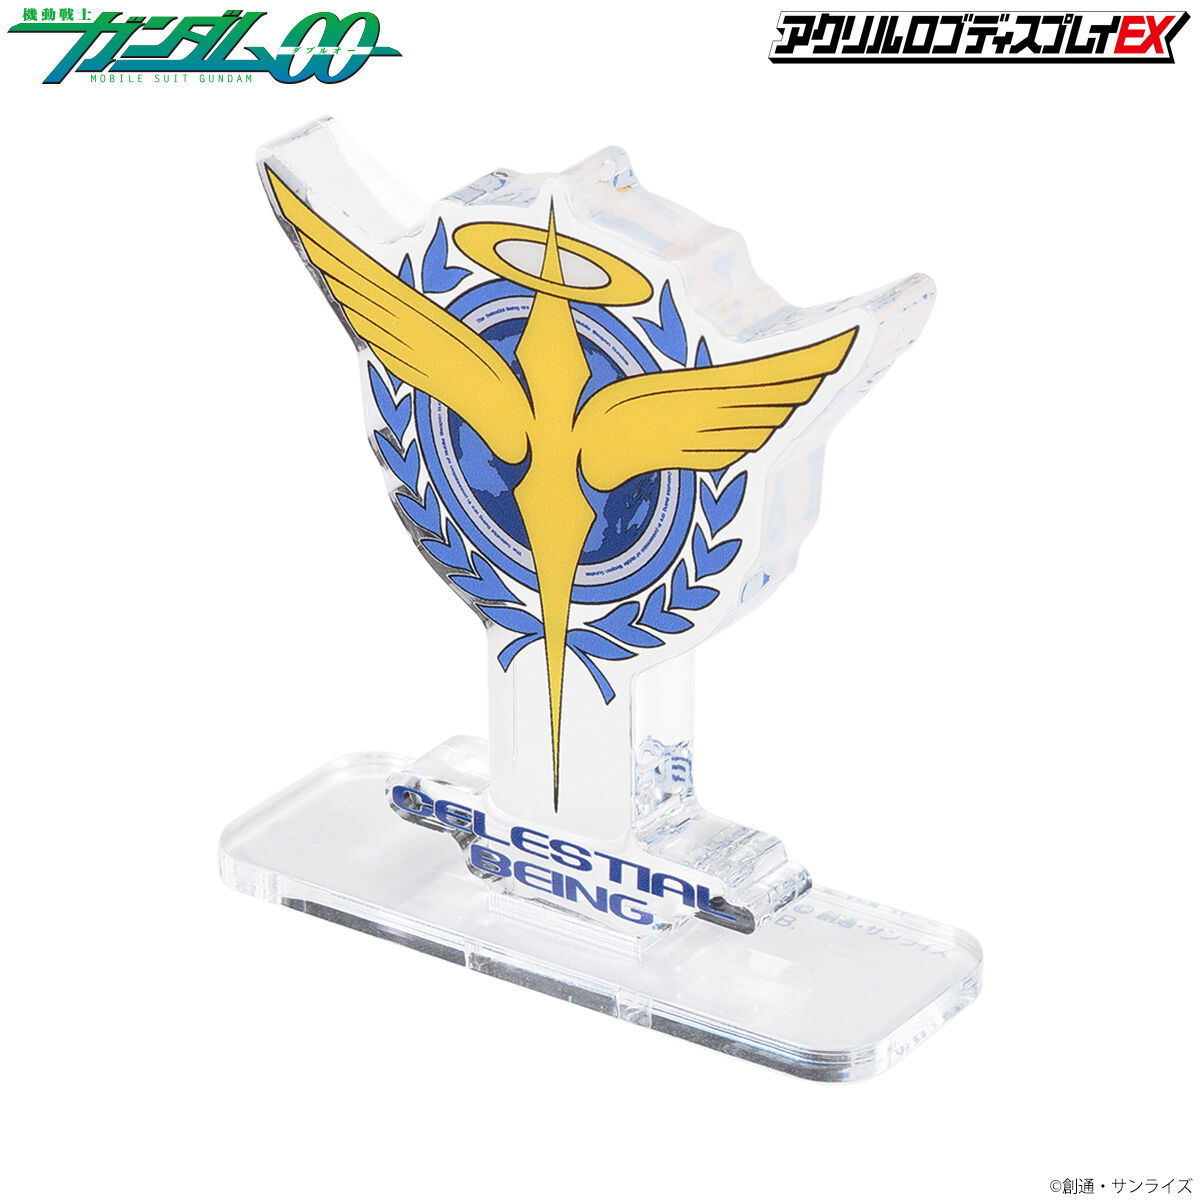 Acrylic Logo Diplay EX-Mobile Suit Gundam 00 : Celestial Being Mark